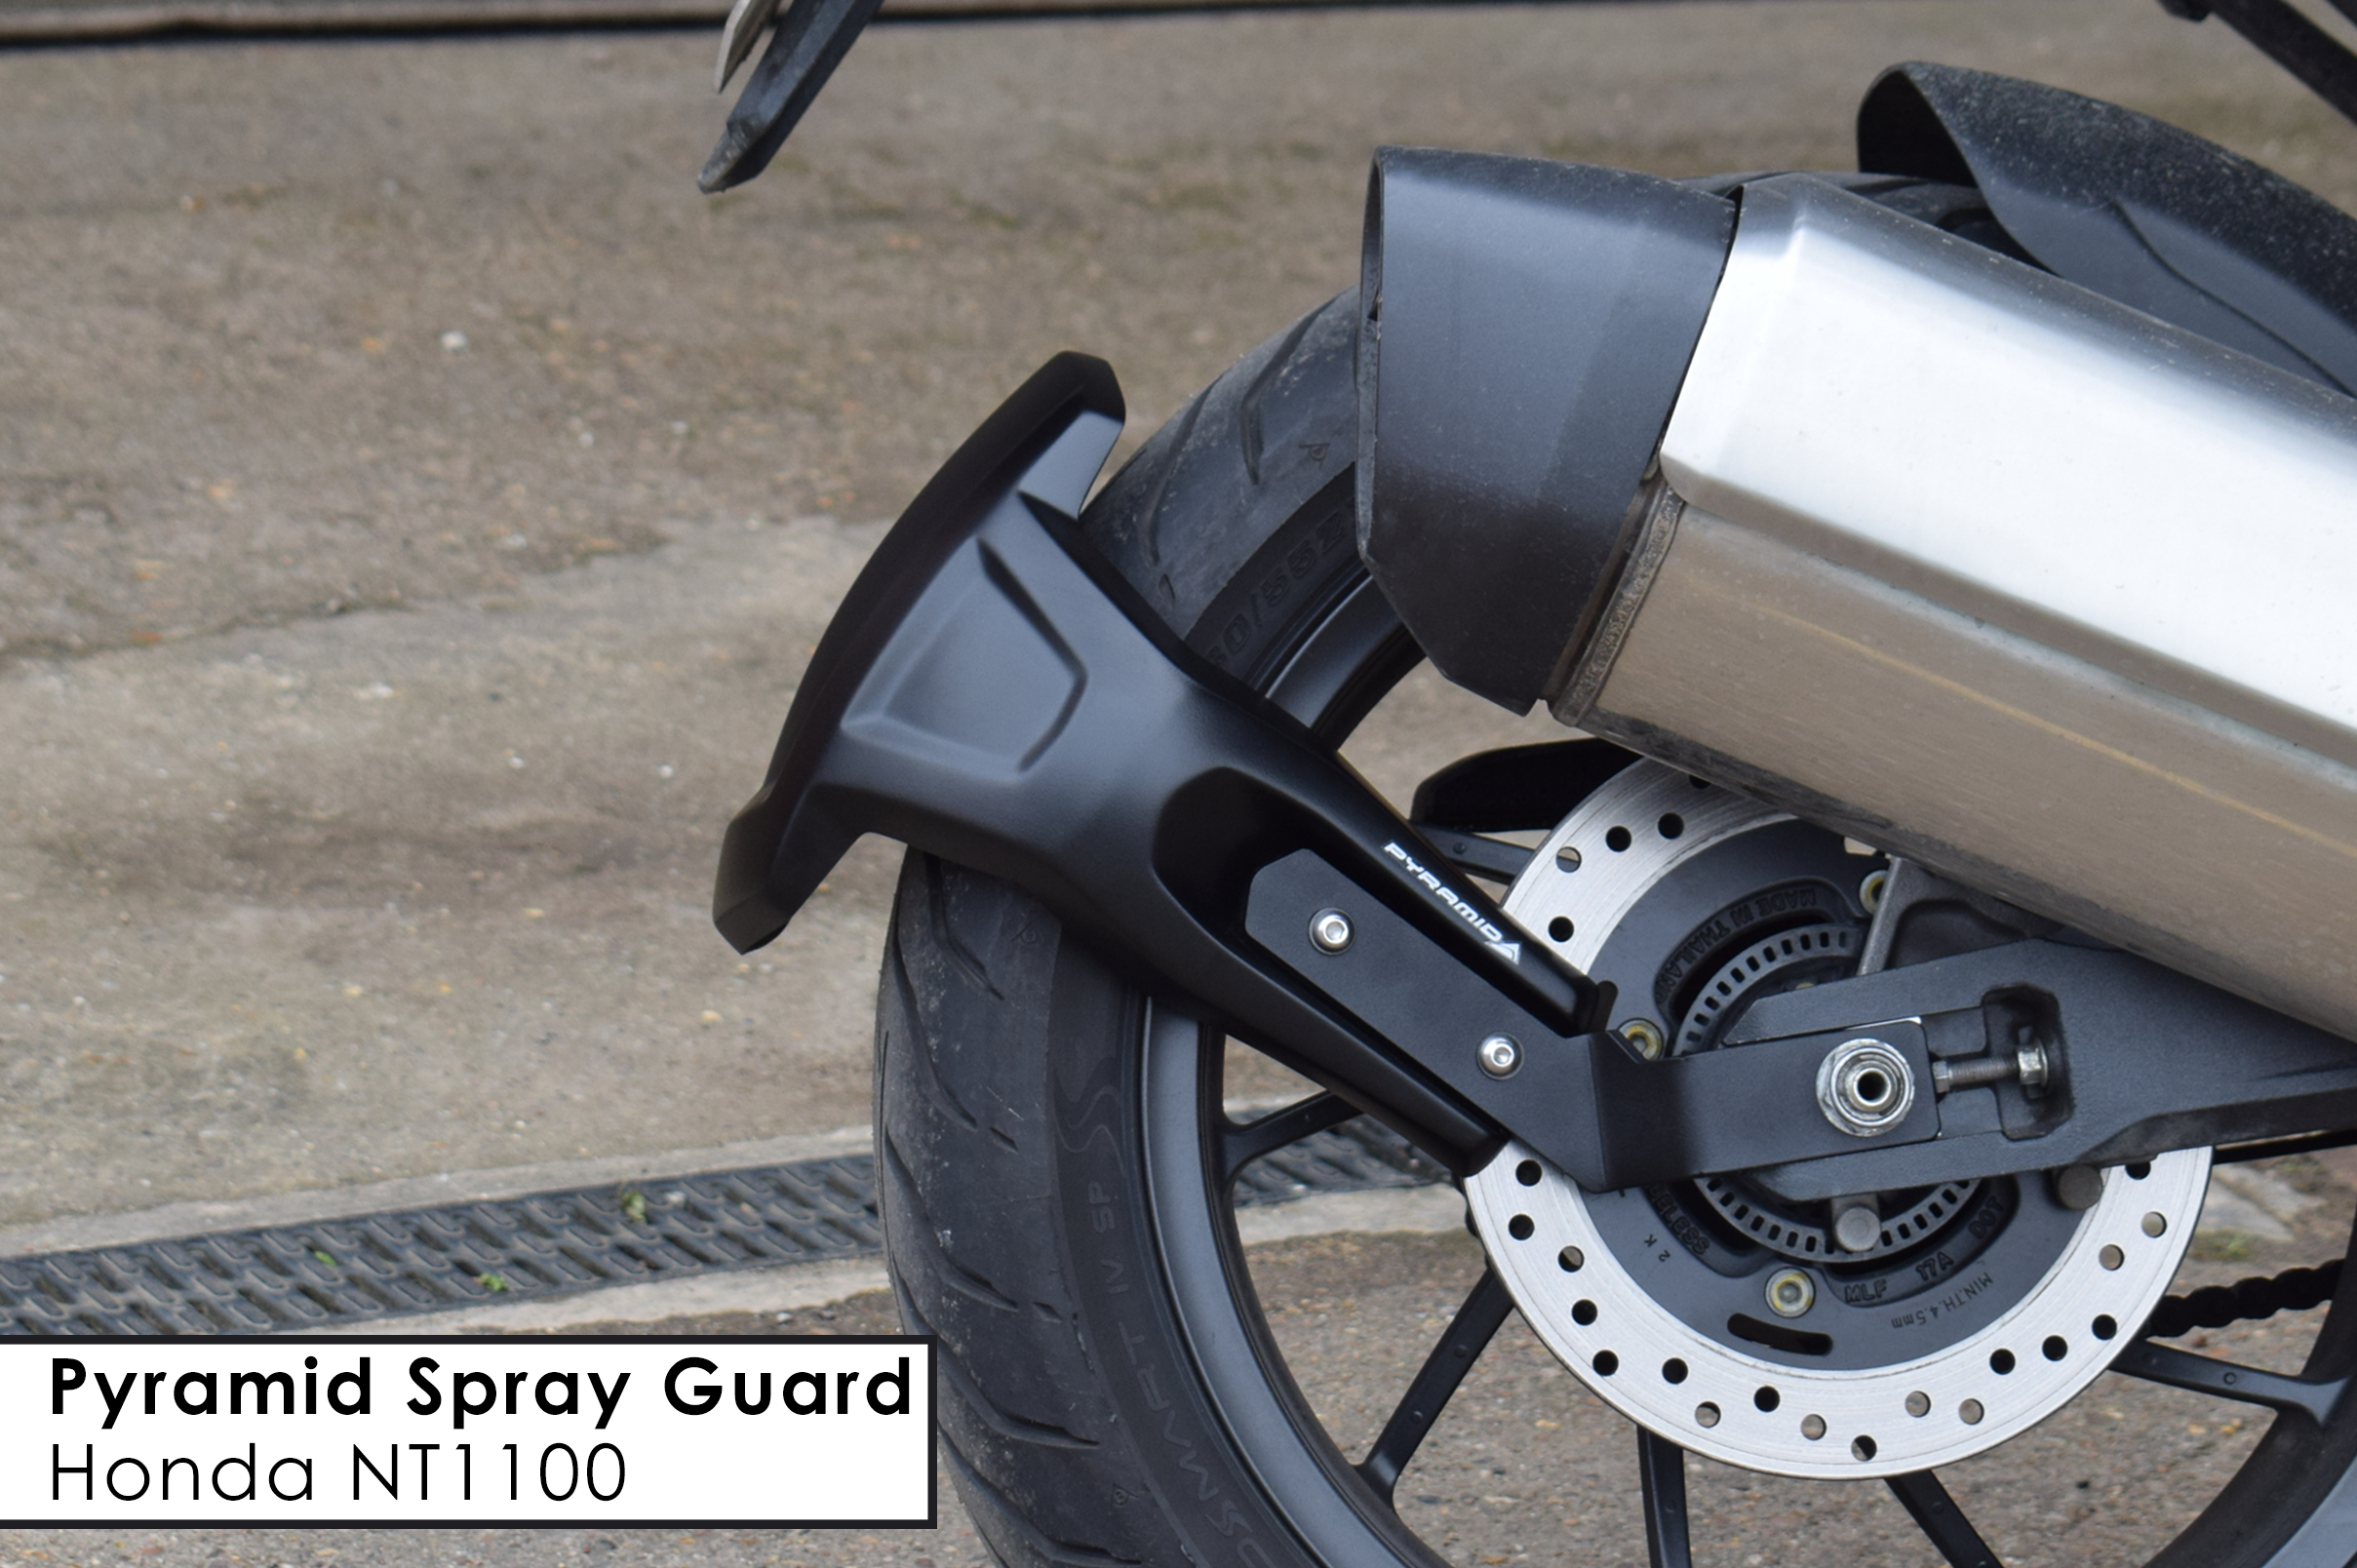 Honda NT1100 Gets A Rear Spray Guard!